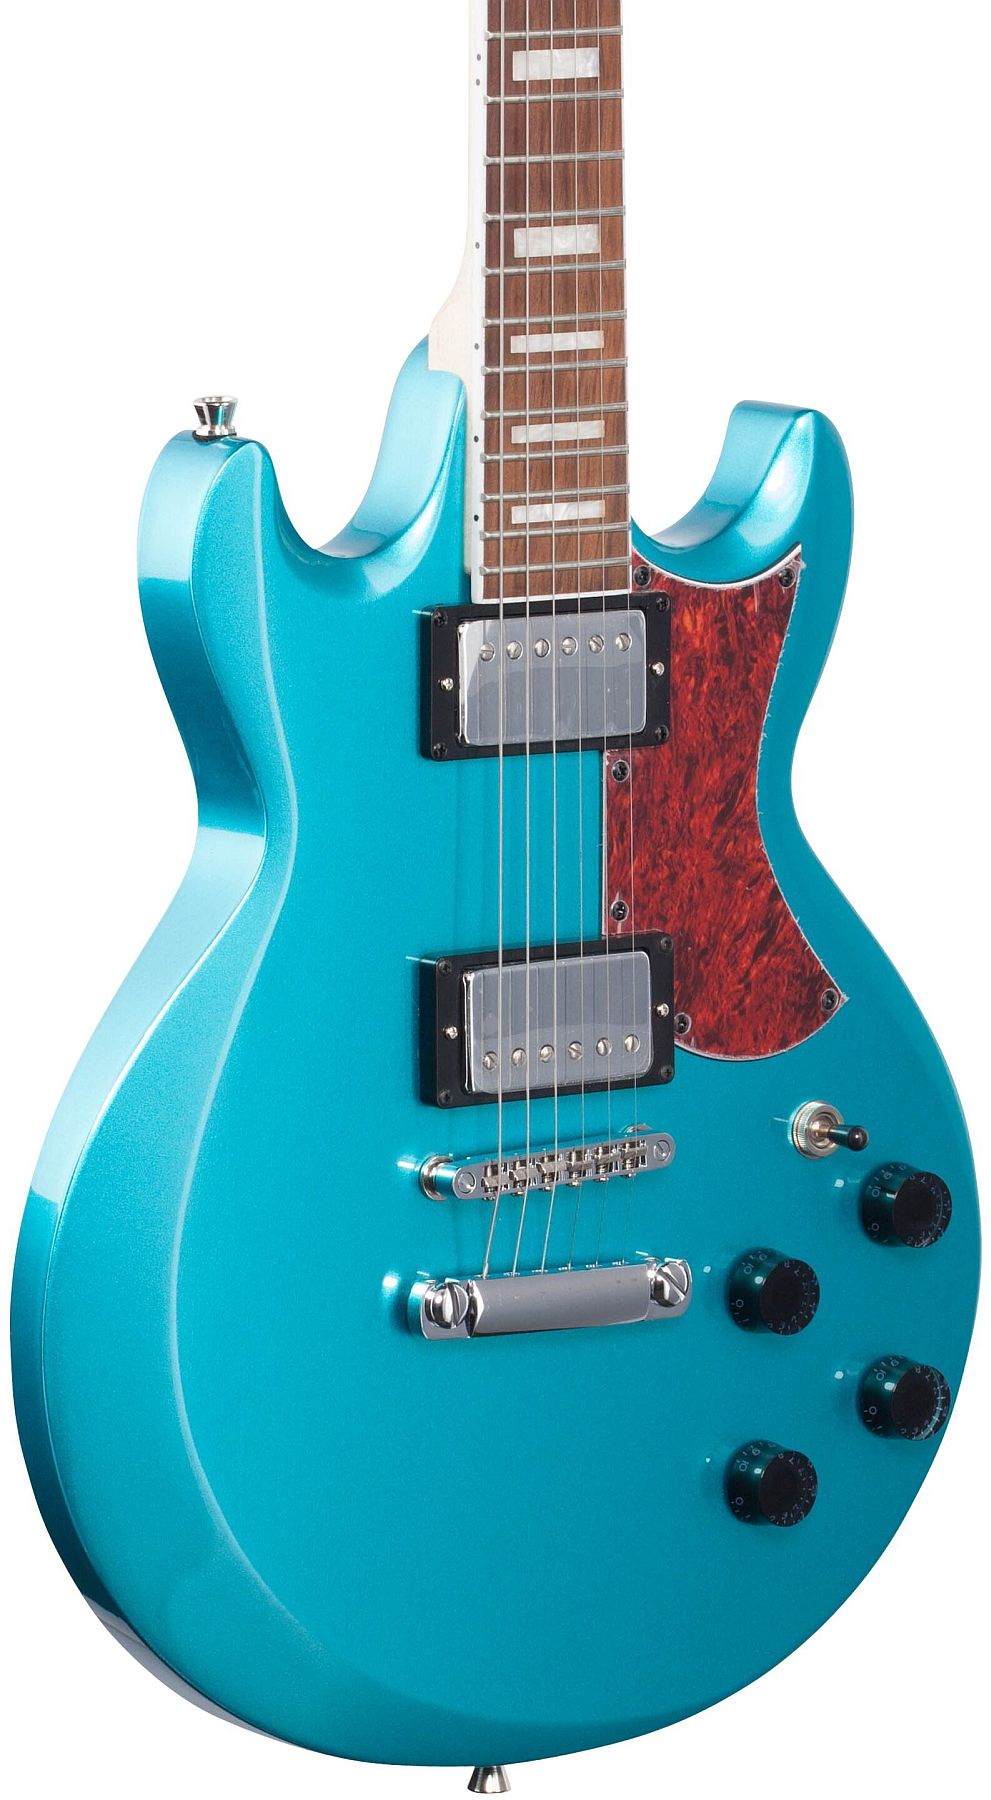 Ibanez AX120 electric guitar in Metallic Light Blue